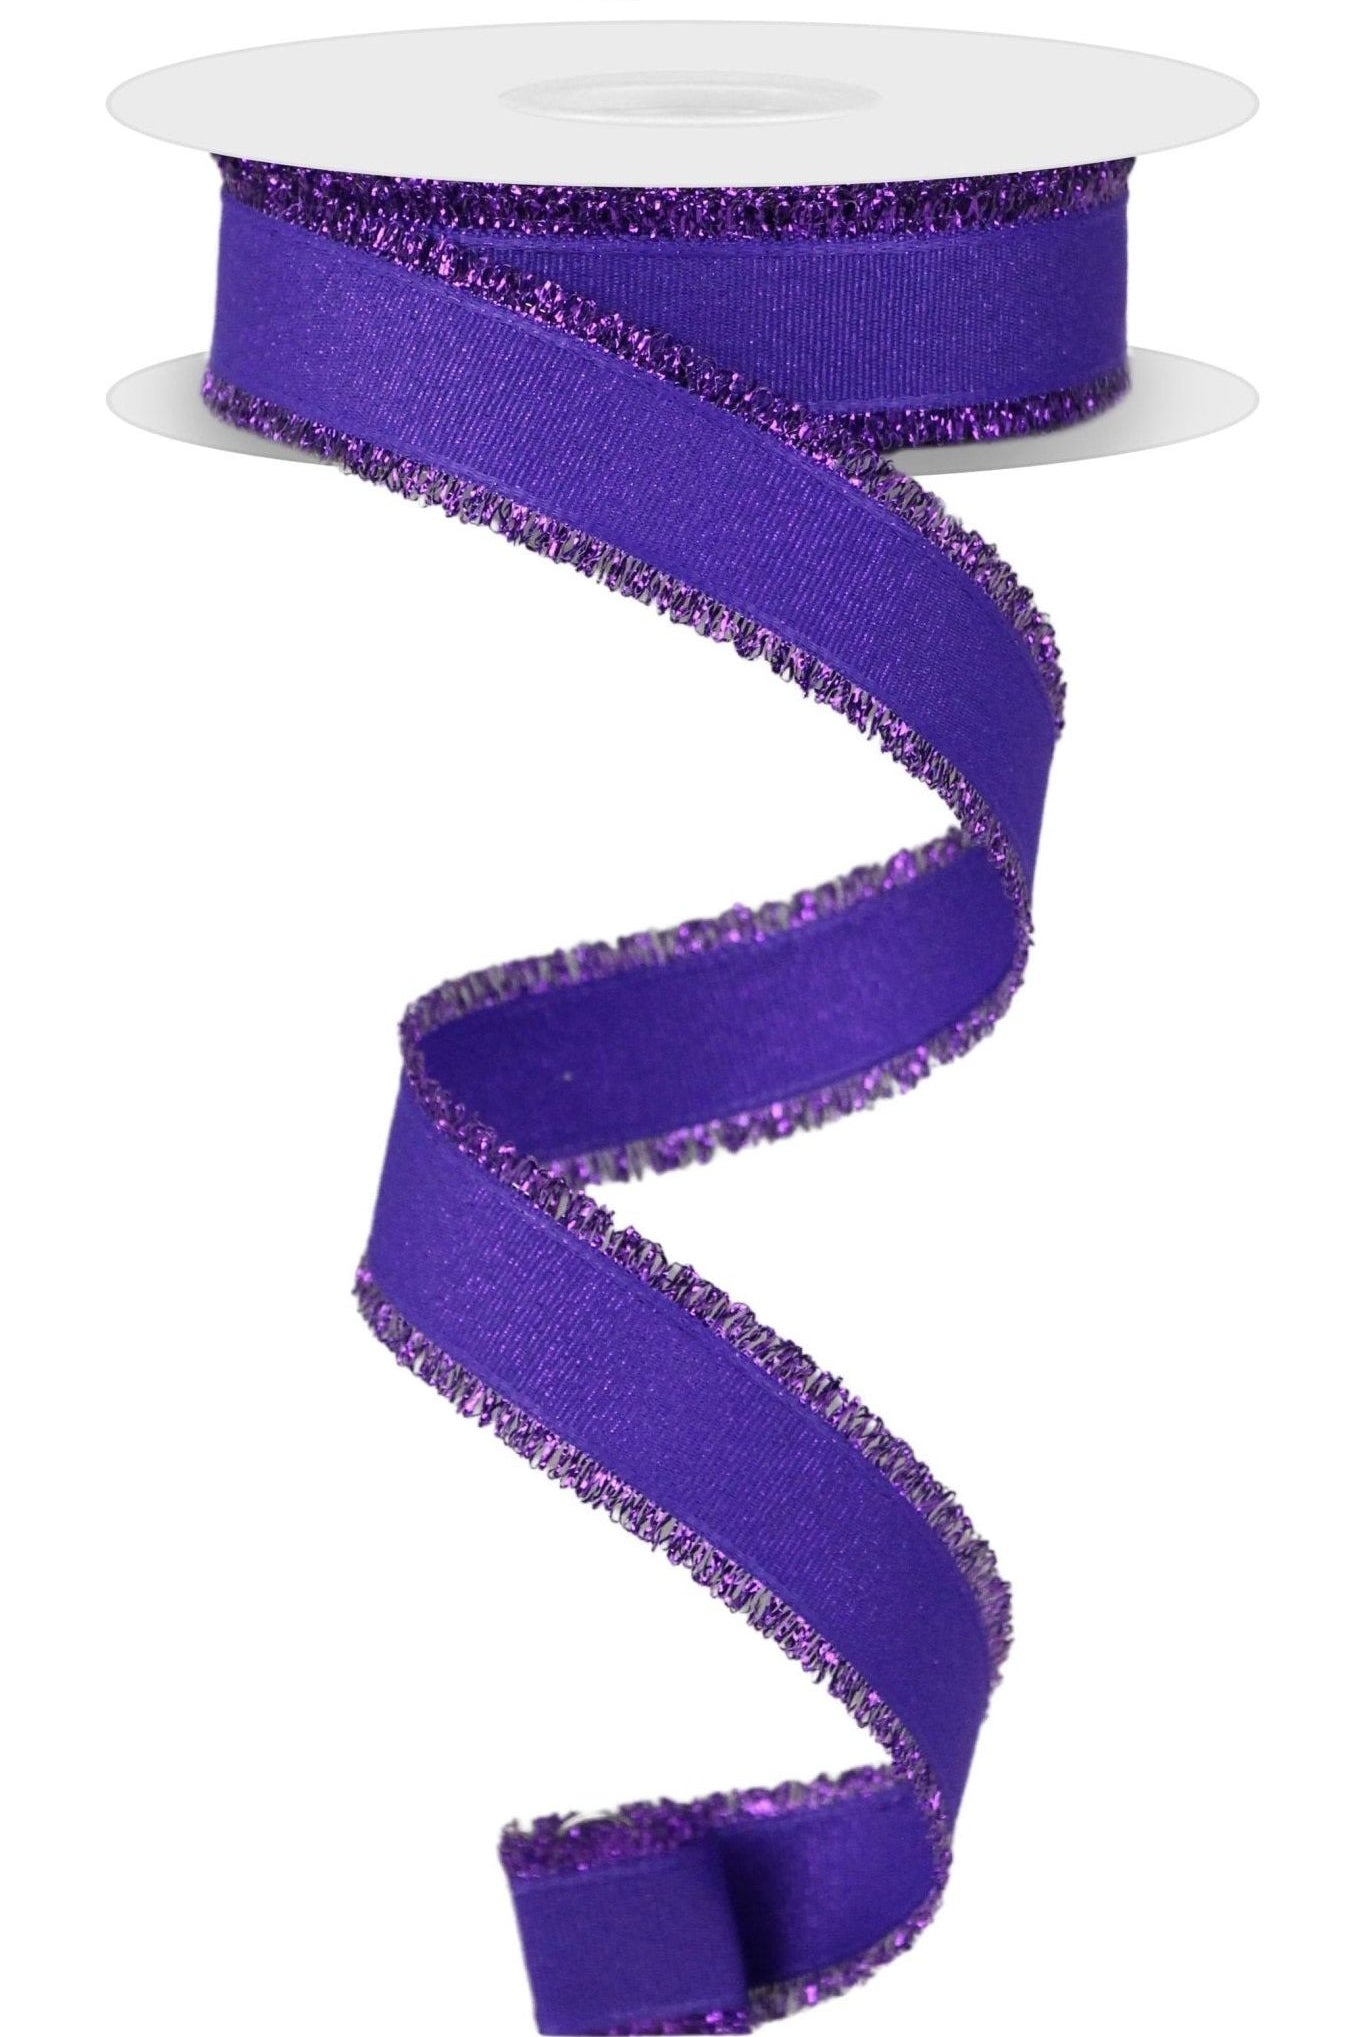 Shop For 7/8" Fuzzy Edge Ribbon: Purple (10 Yards) RN587923